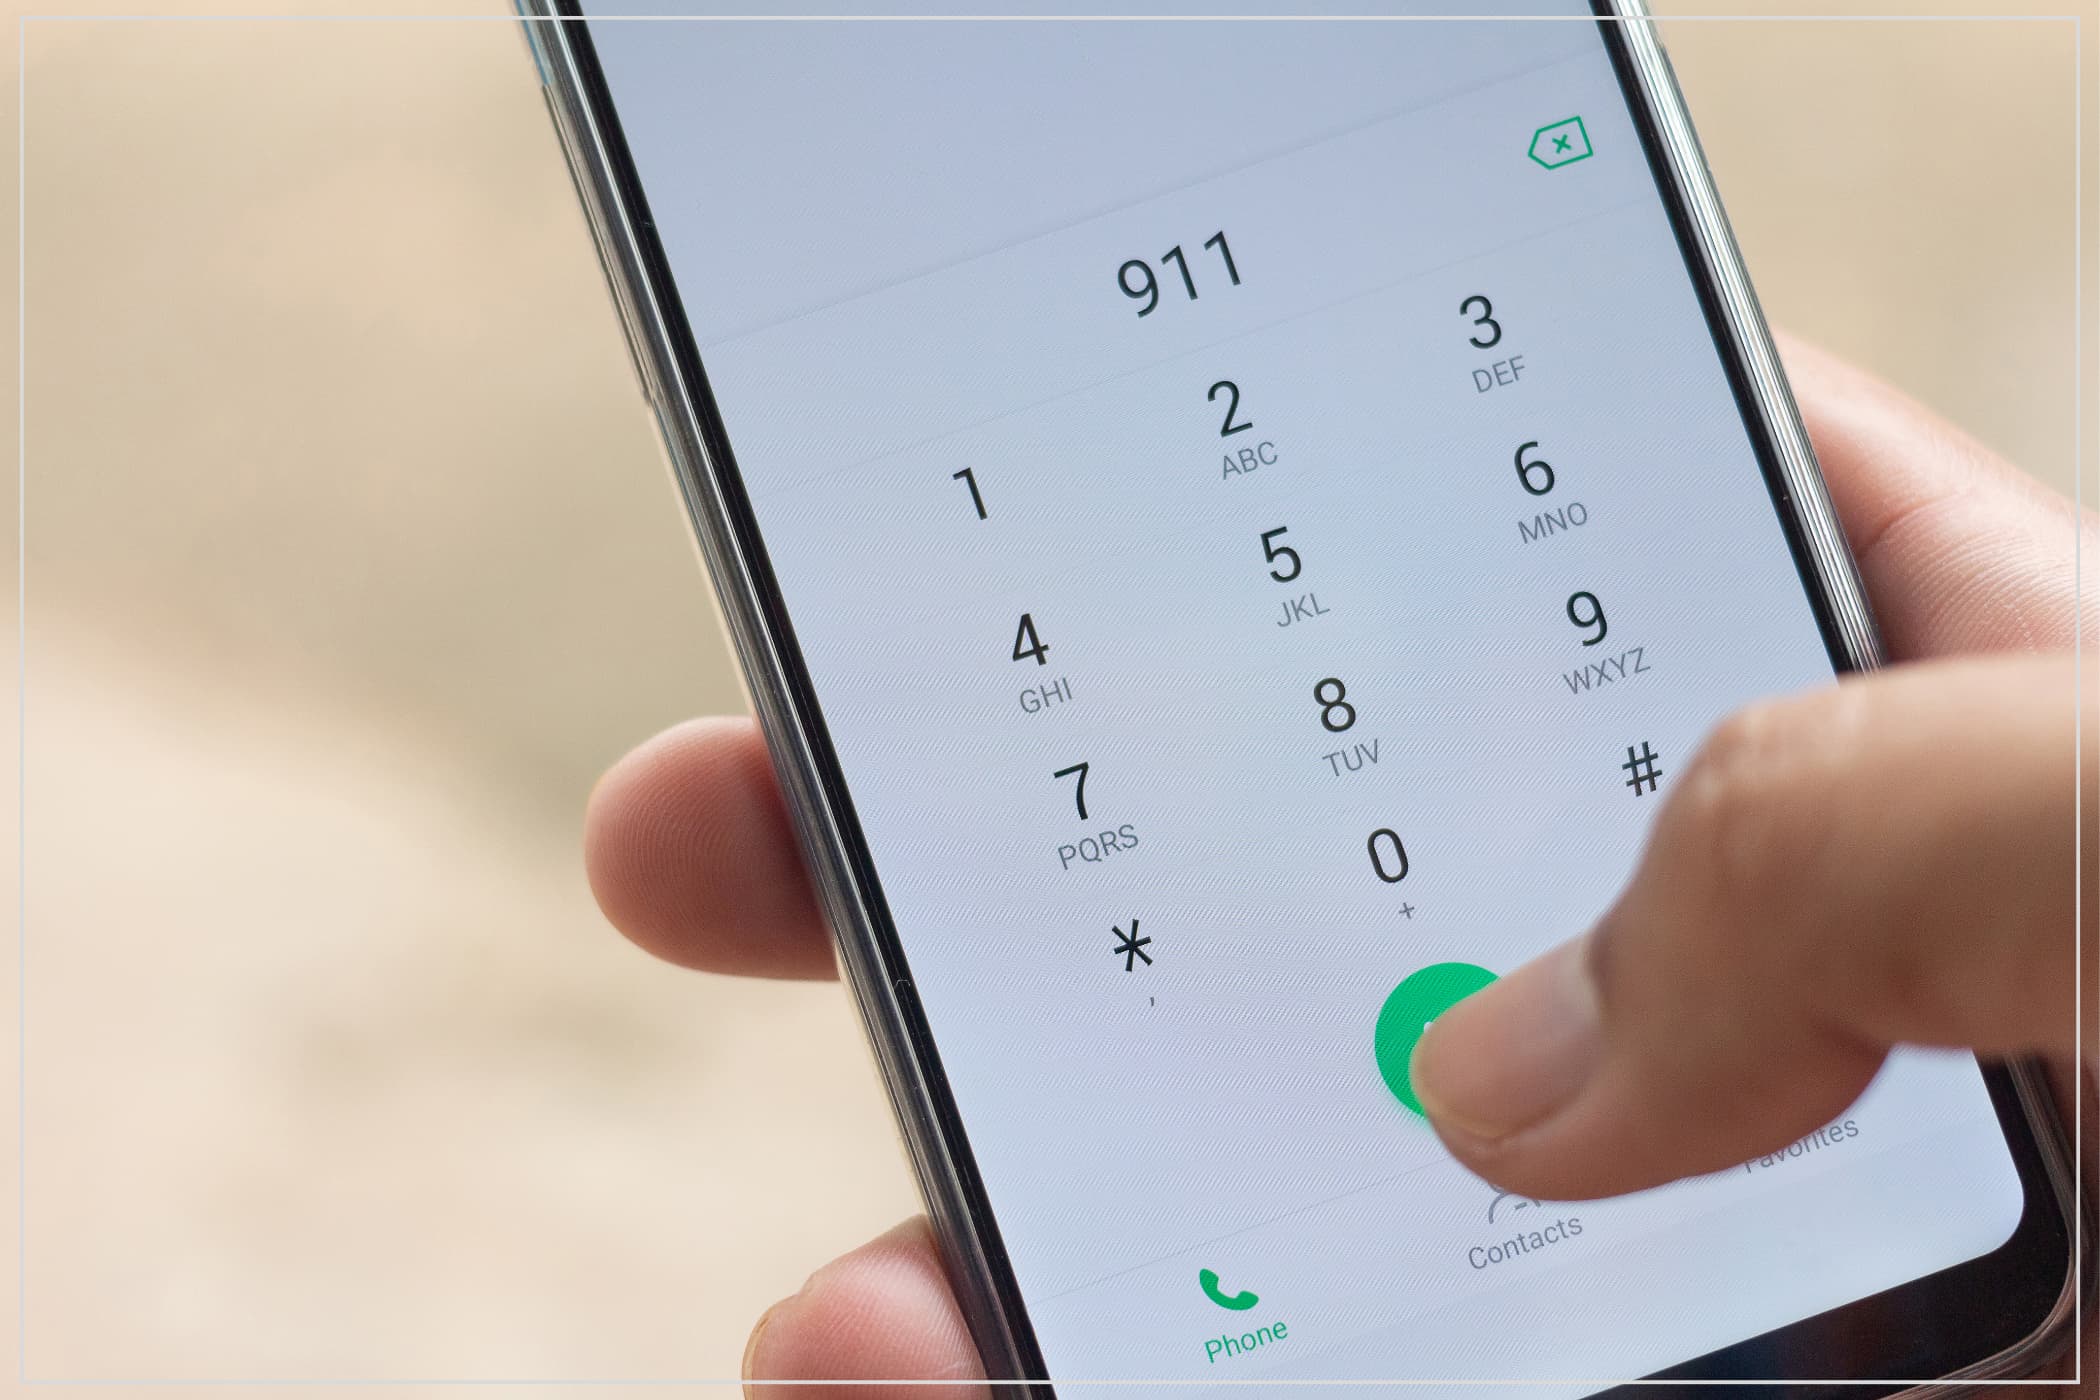 911 on a smart phone screen